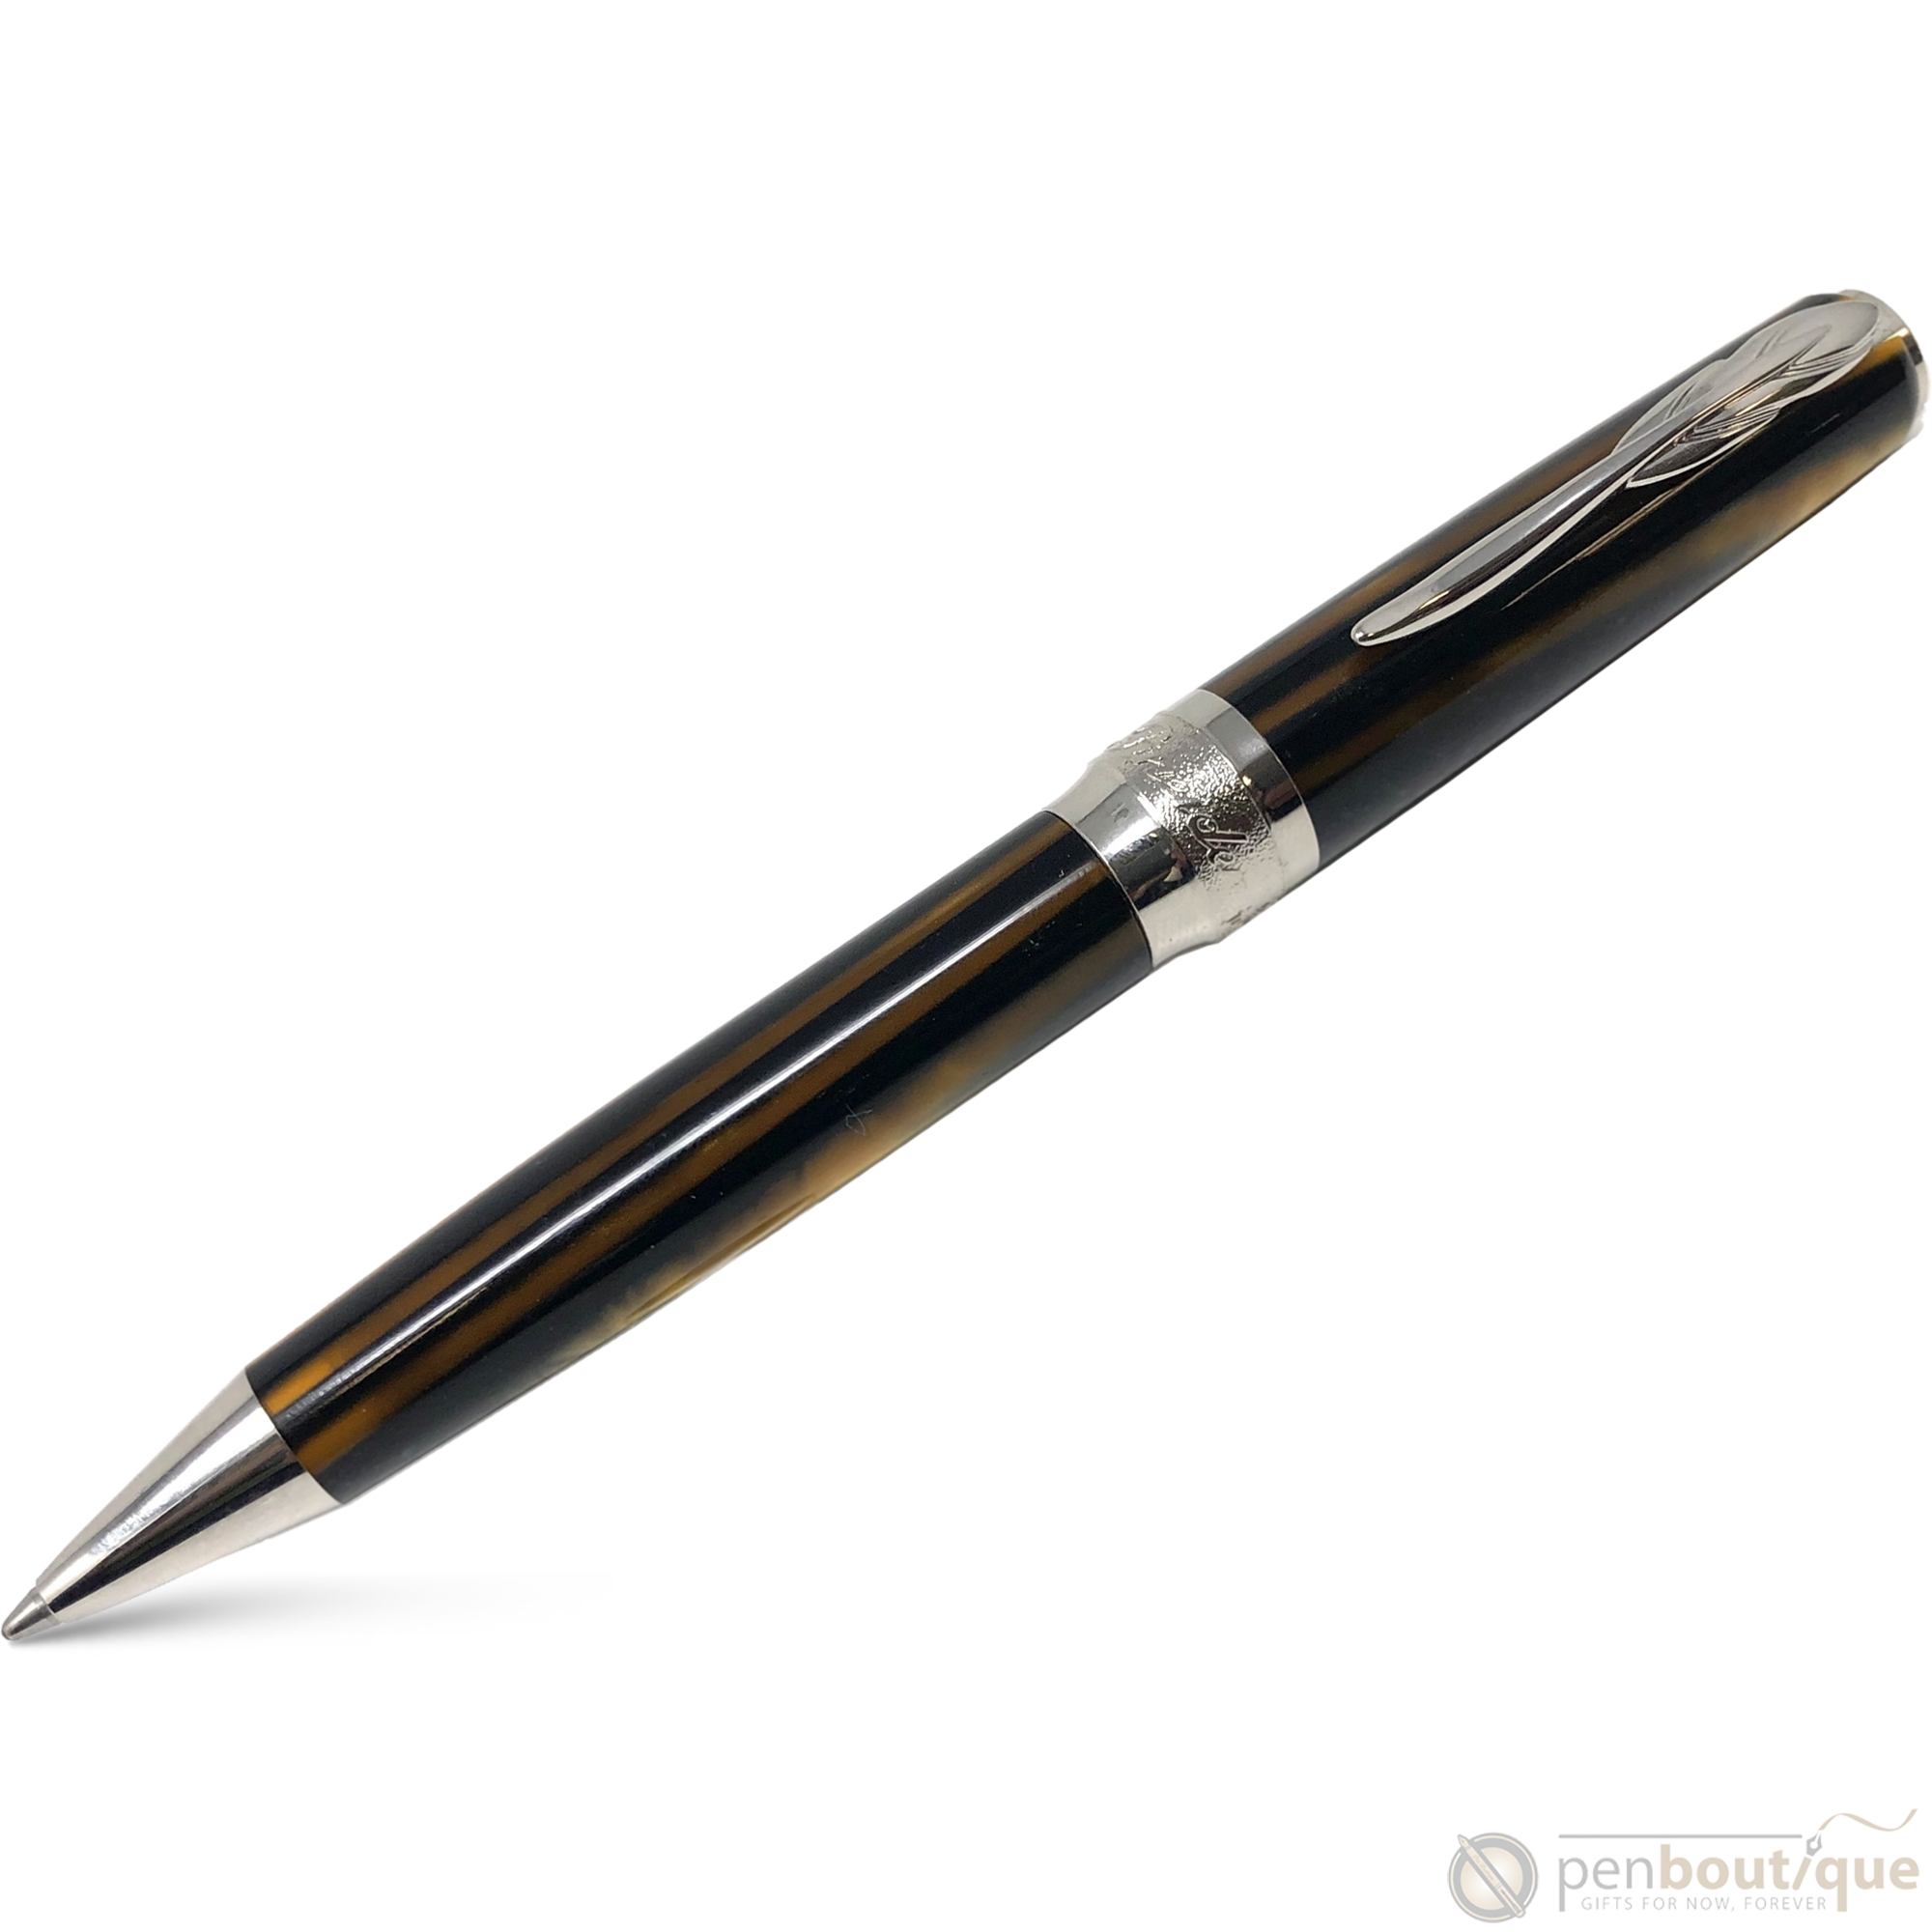 Pineider Arco Ballpoint Pen - Limited Edition - Blue Bee-Pen Boutique Ltd